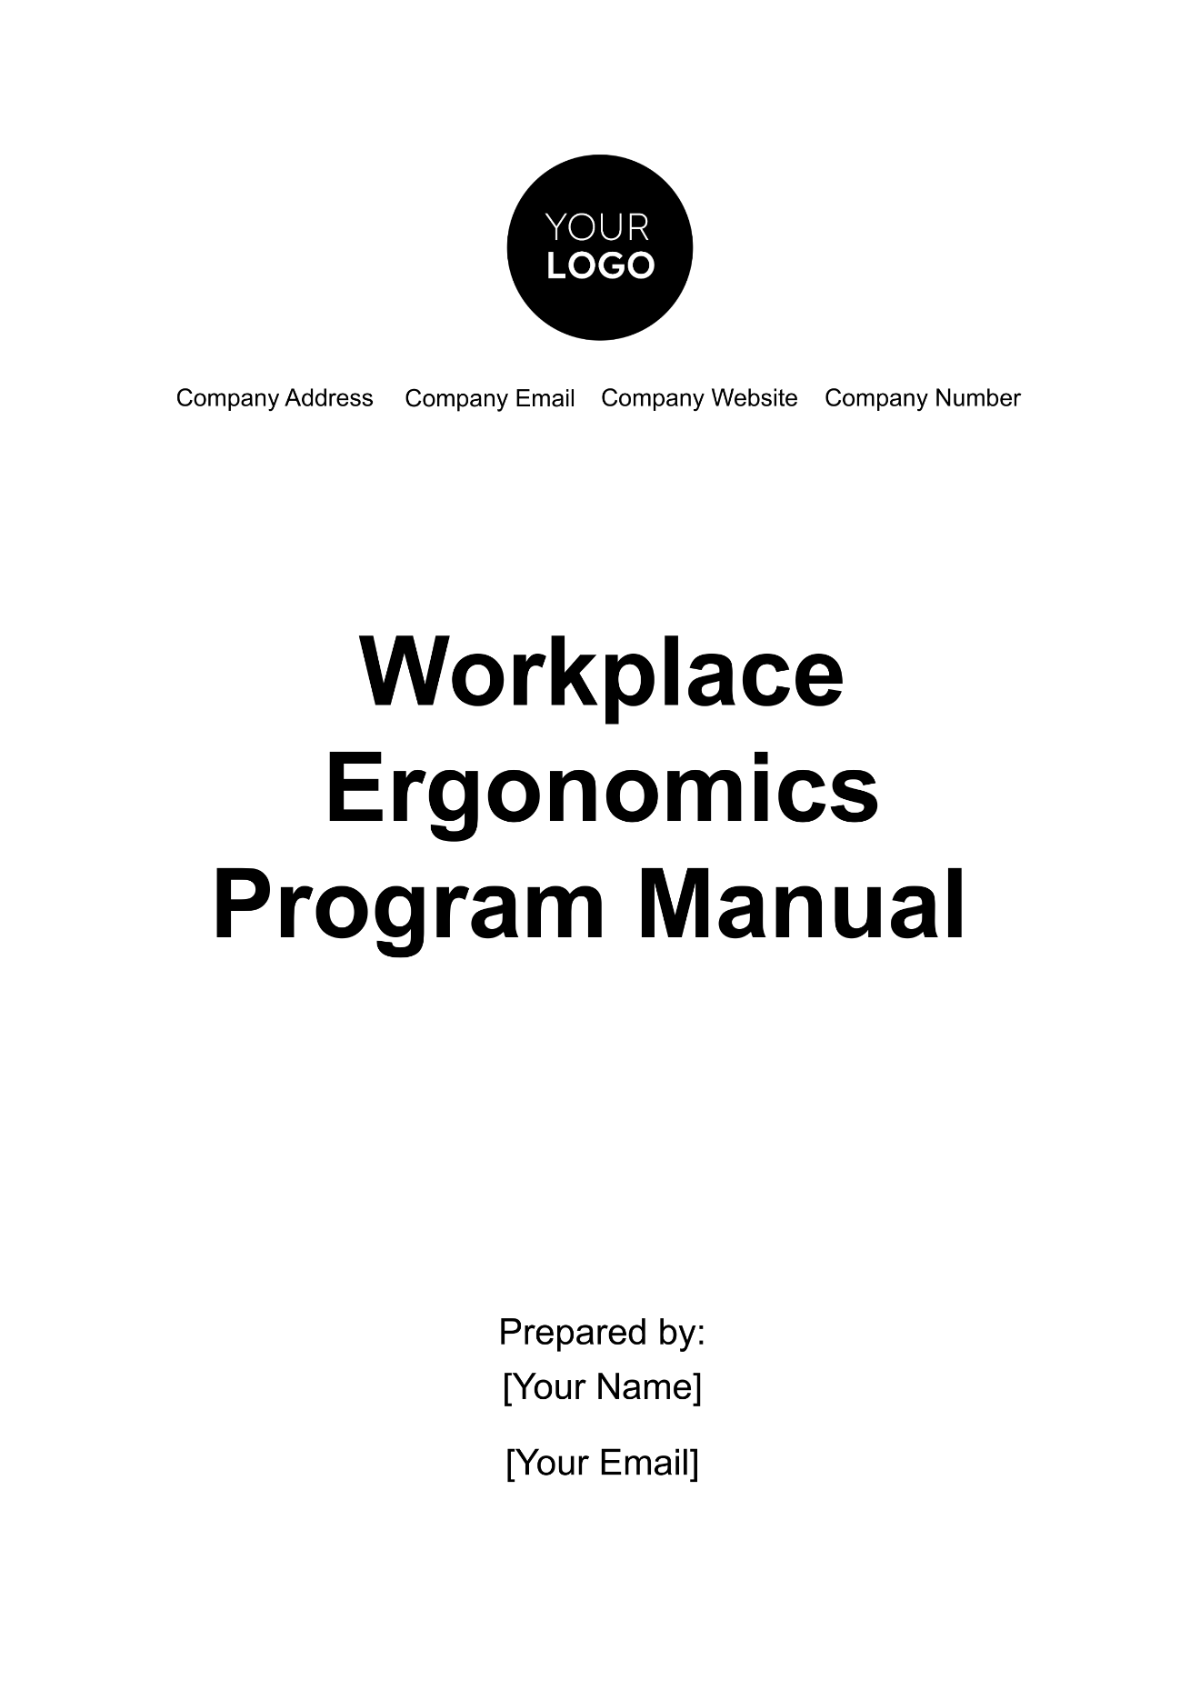 Free Workplace Ergonomics Program Manual Template